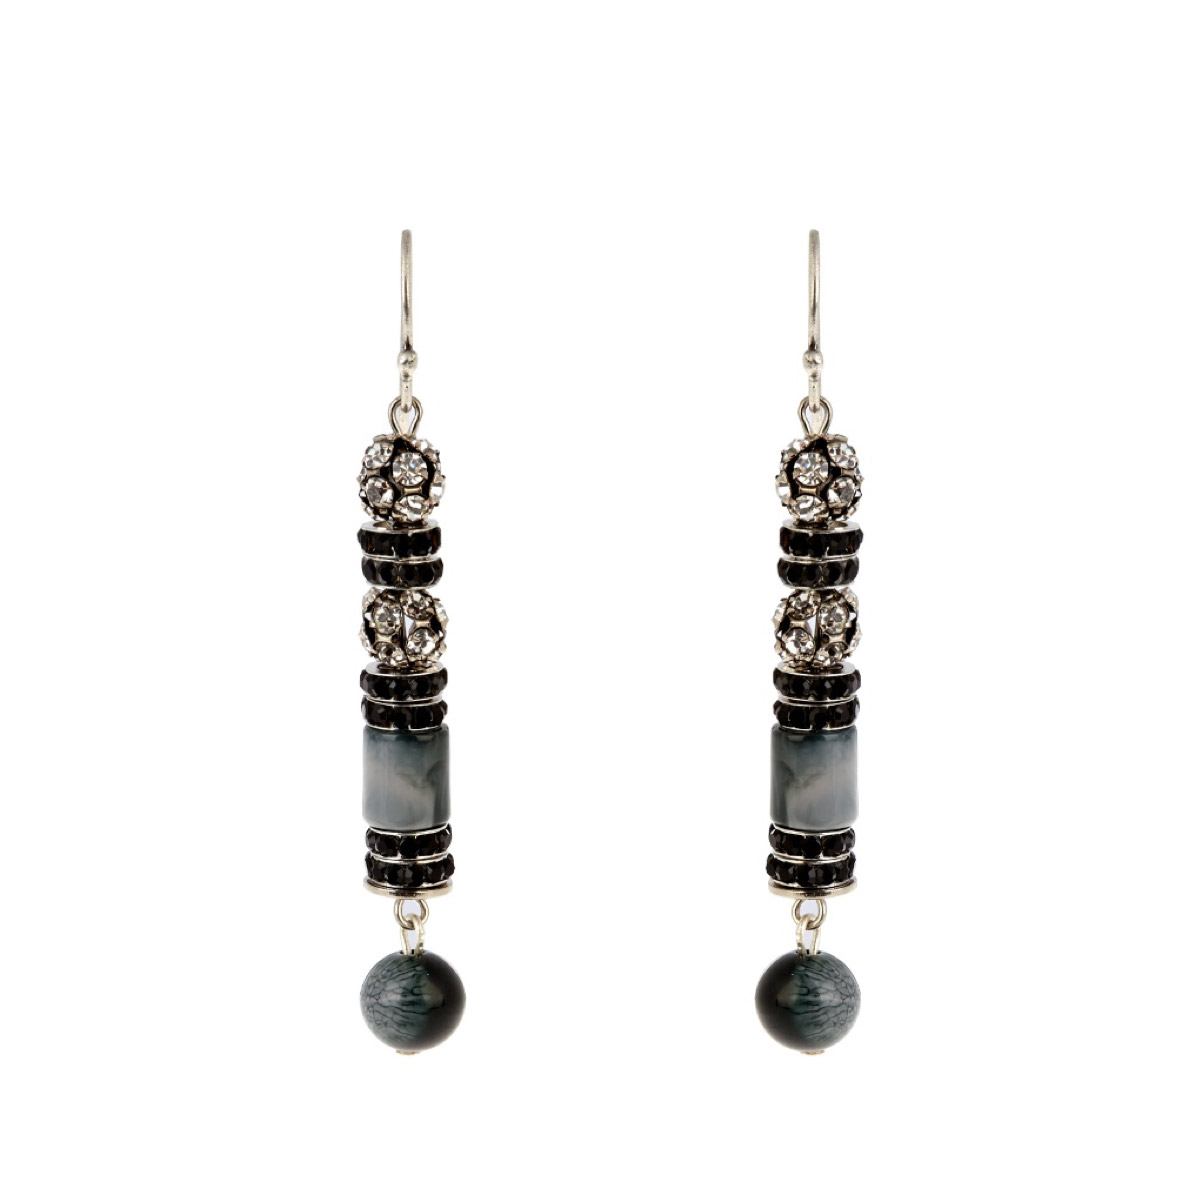 Crystal and bead earrings